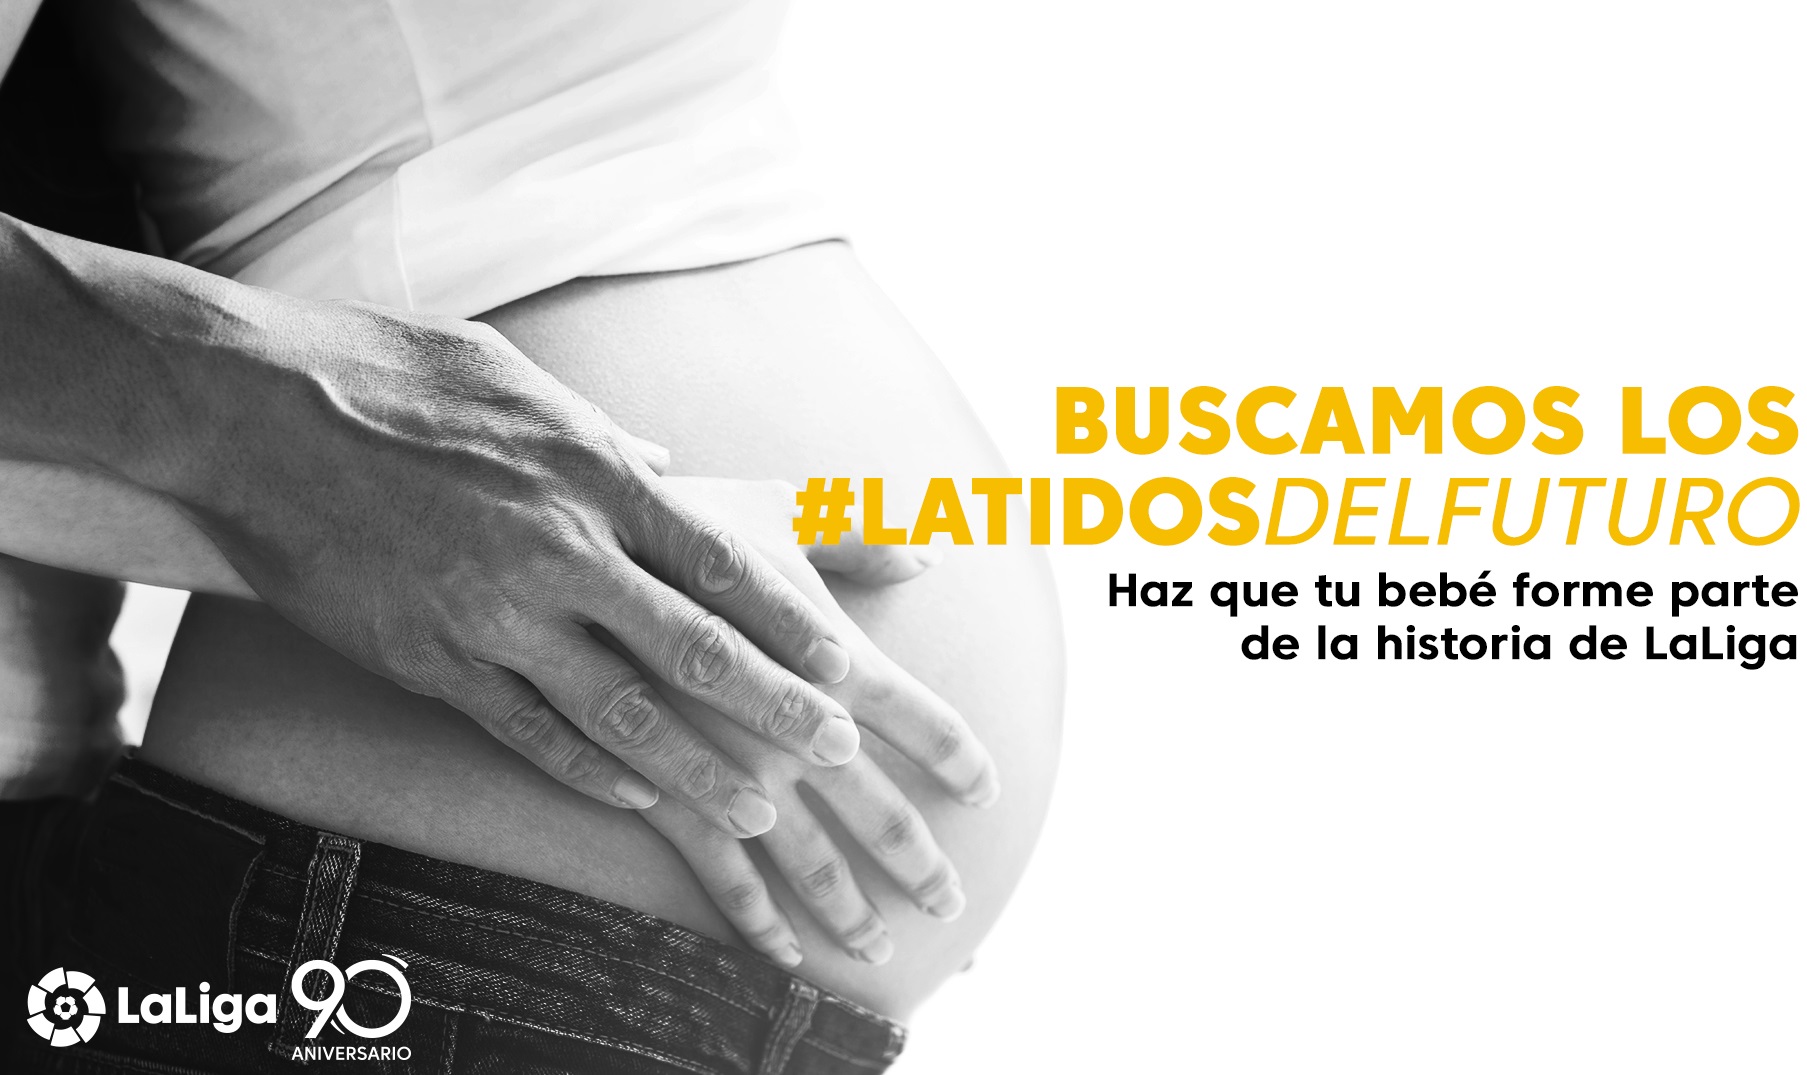 #latidosdelfuturo, LaLIga, 90 aniversario, programapublicidad,